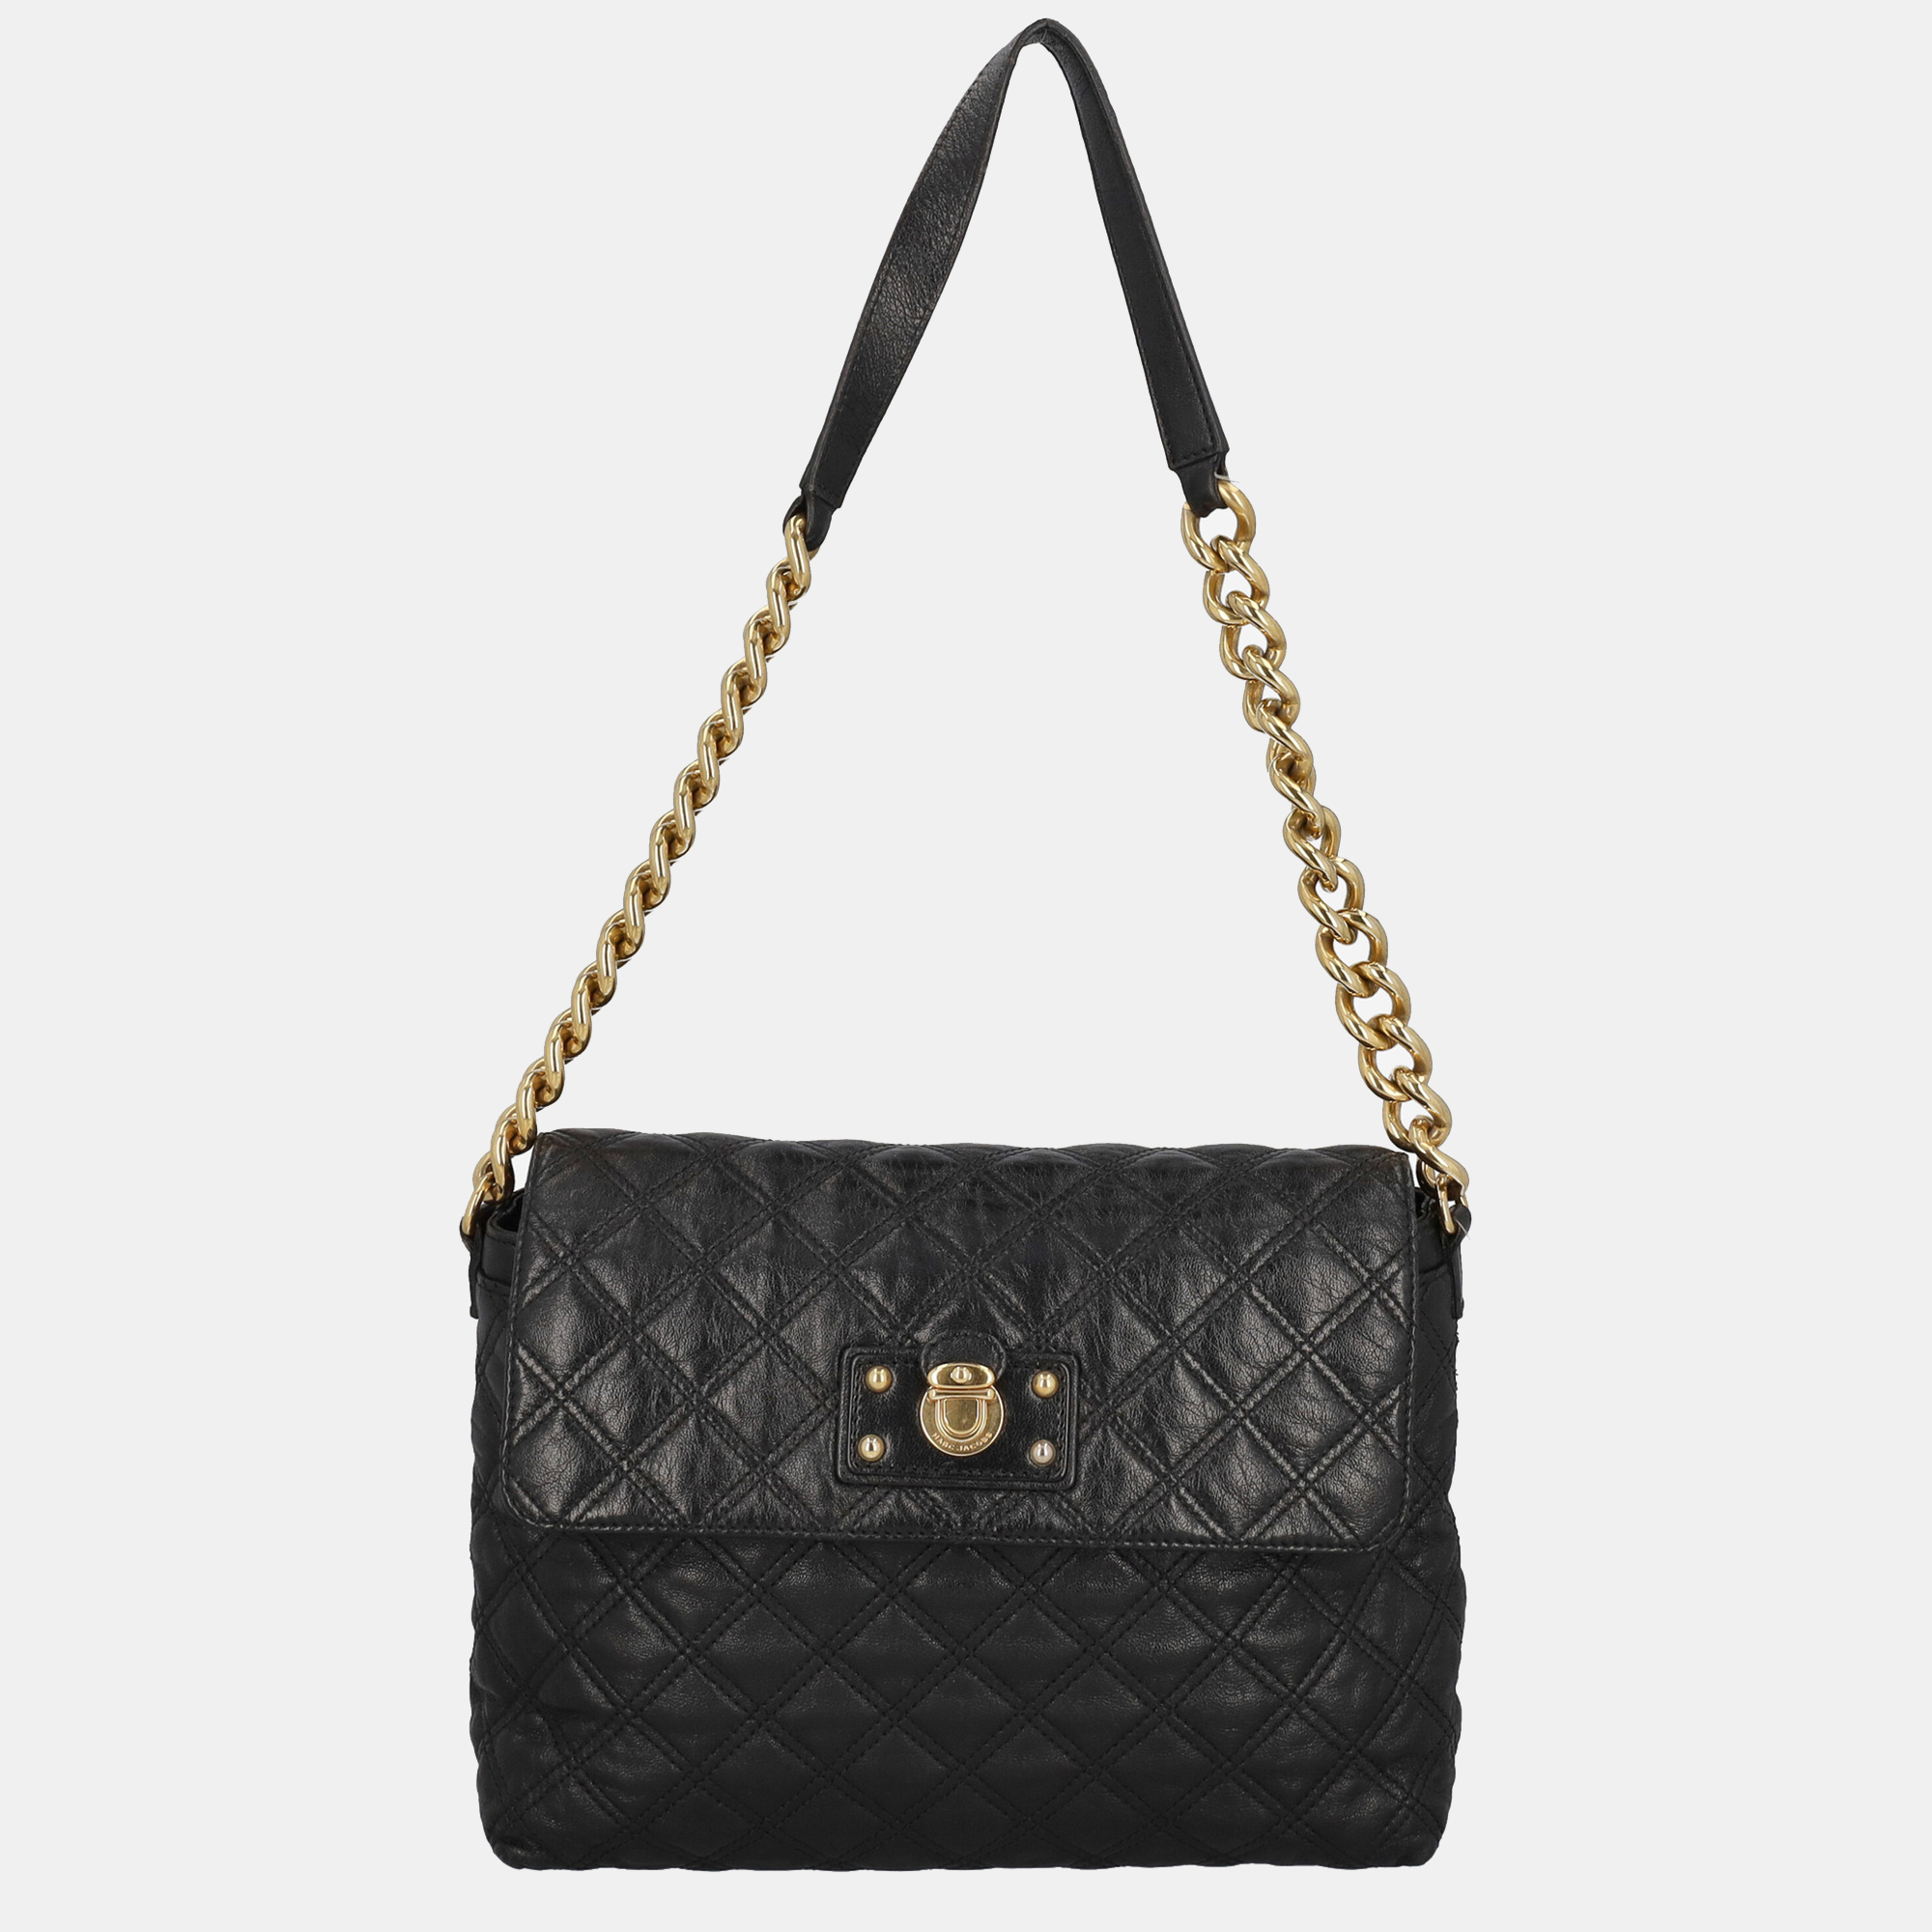 Marc Jacobs  Women's Leather Shoulder Bag - Black - One Size